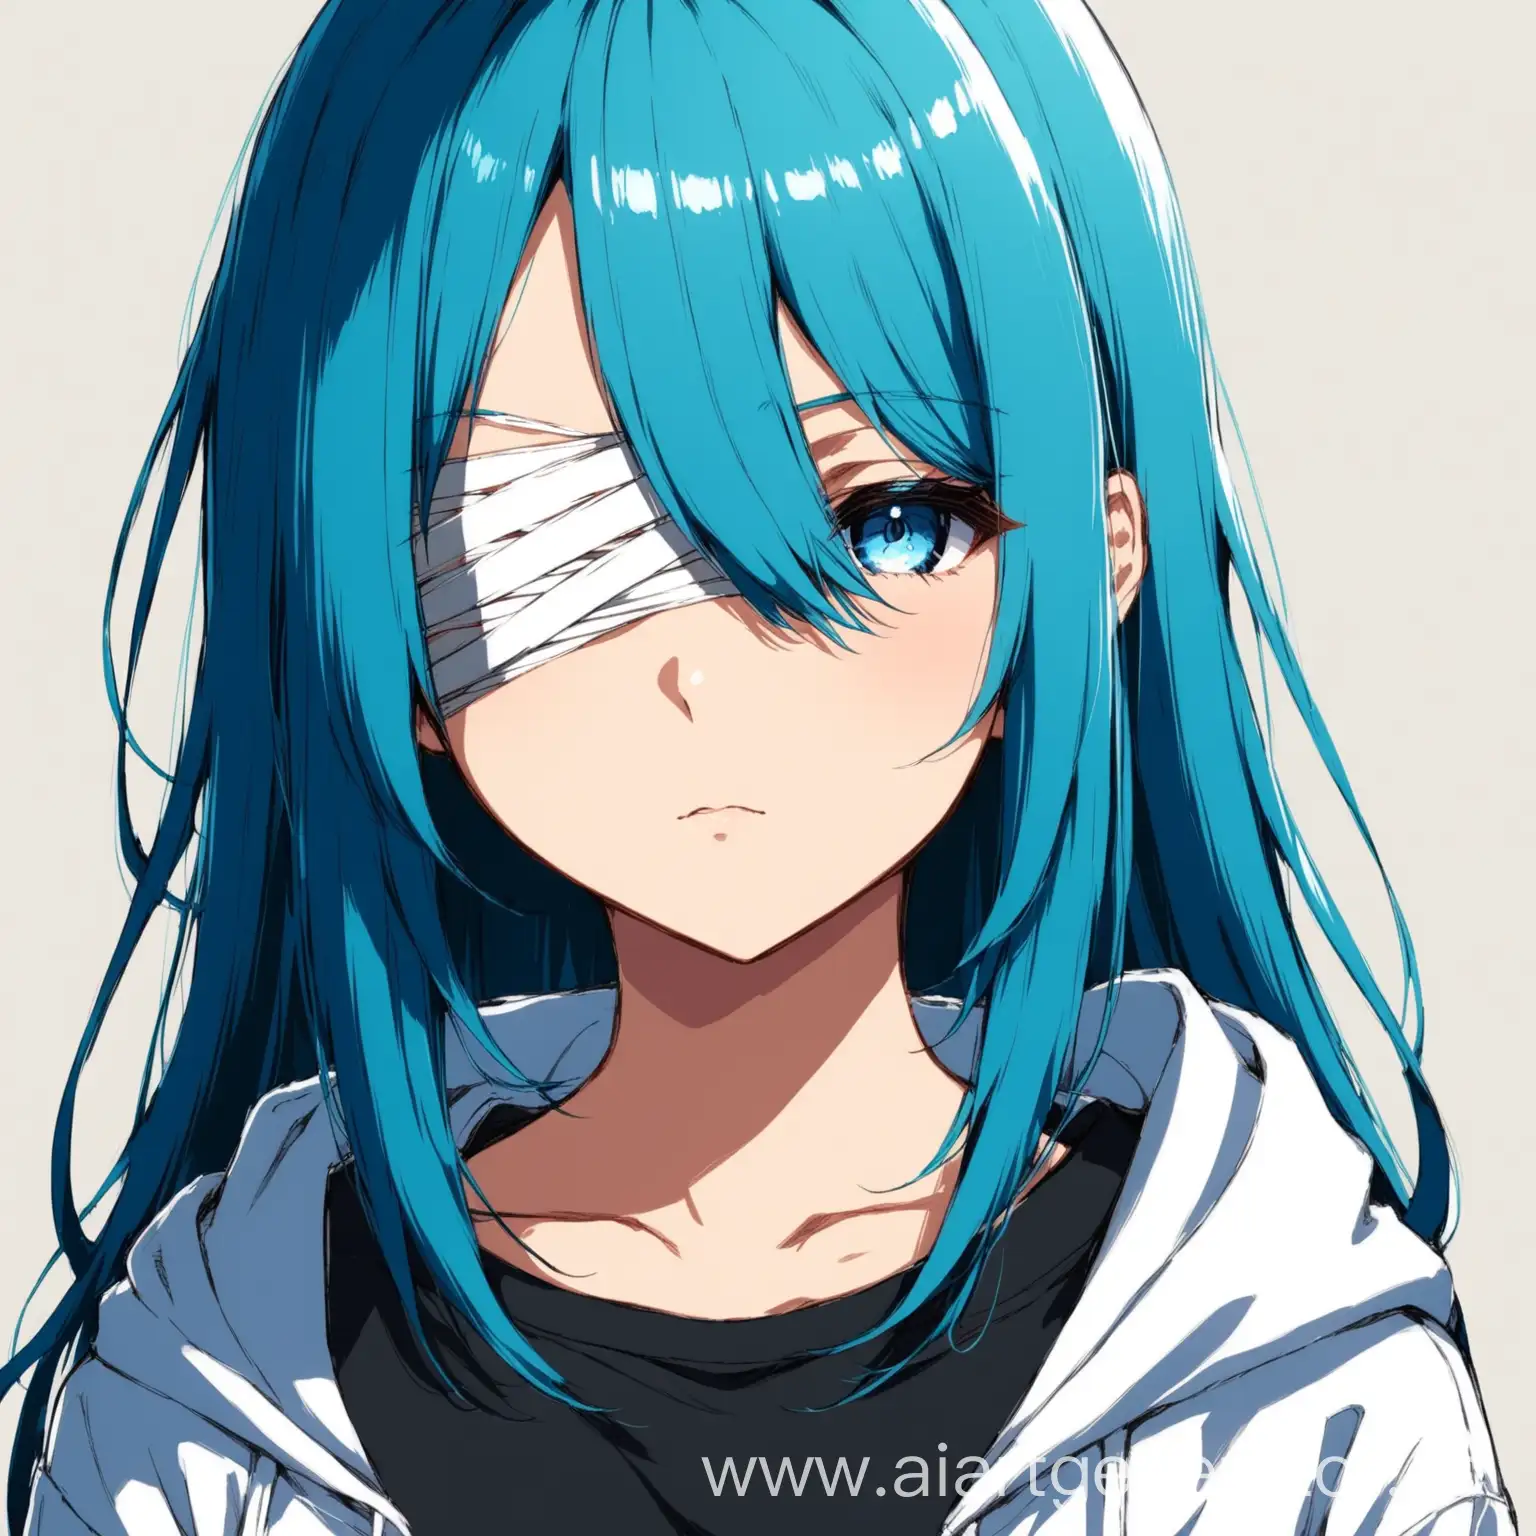 Anime-Girl-with-Blue-Hair-and-Eye-Bandage